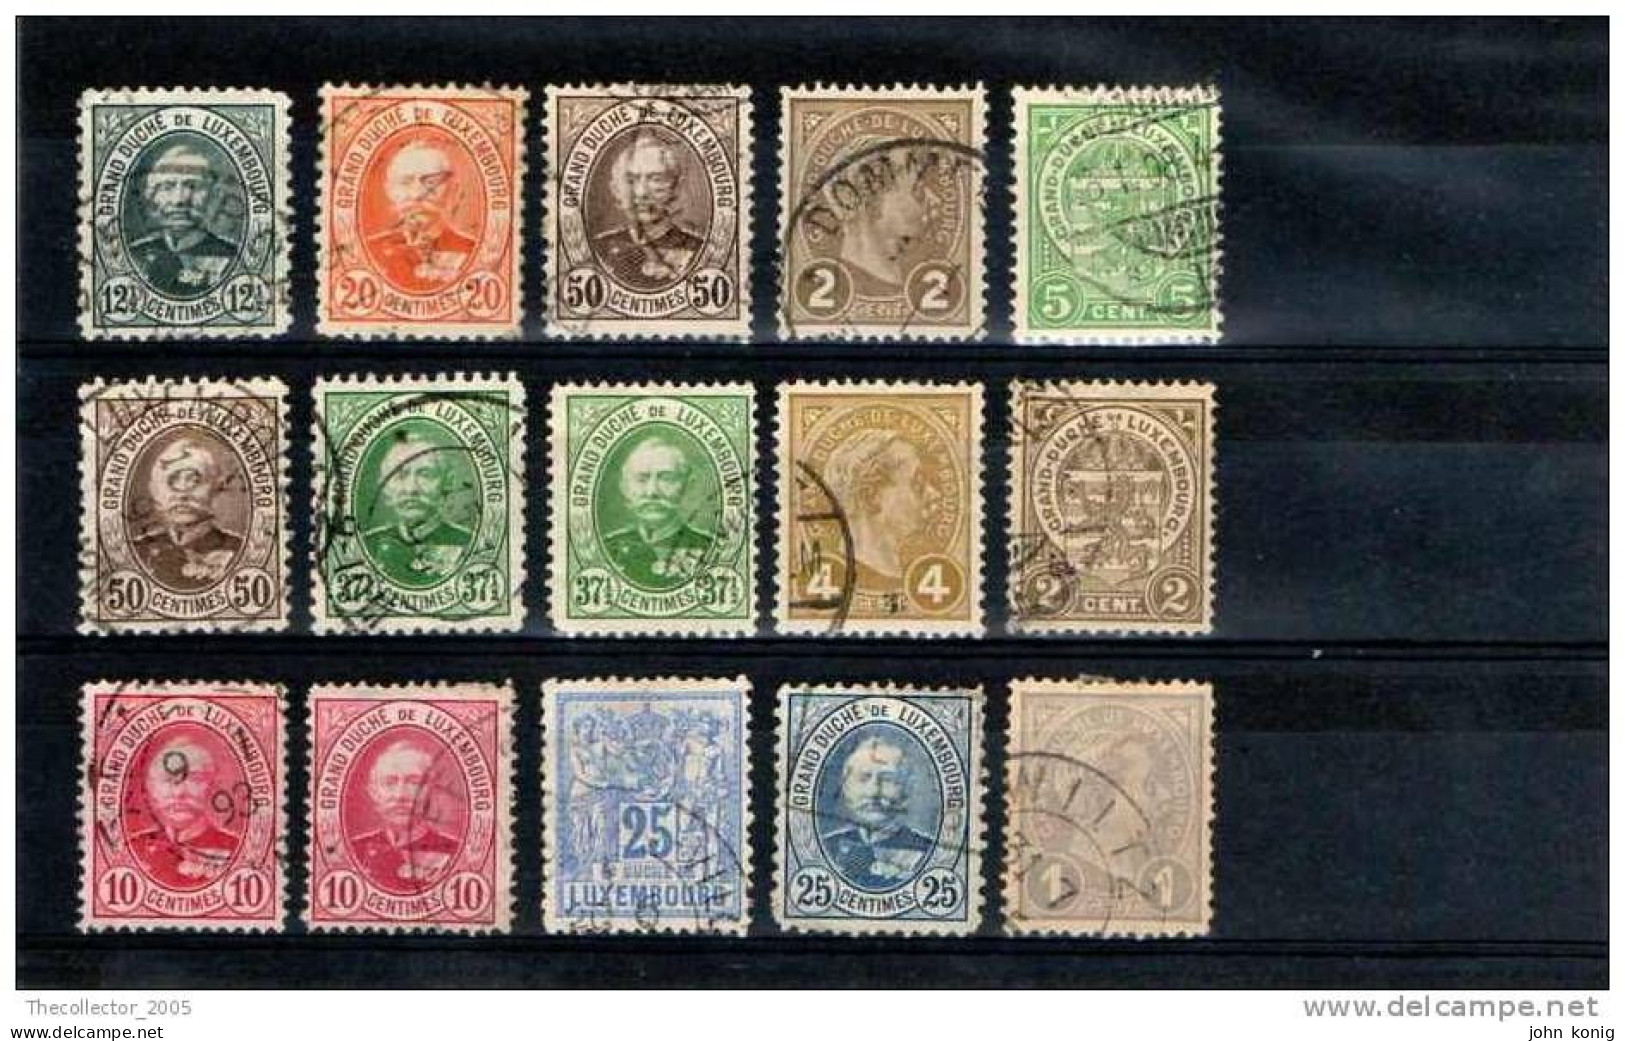 Luxembourg - Lussemburgo - Stamps Lot Used - Gestempeld - Francobolli Lotto Usati - Sammlungen